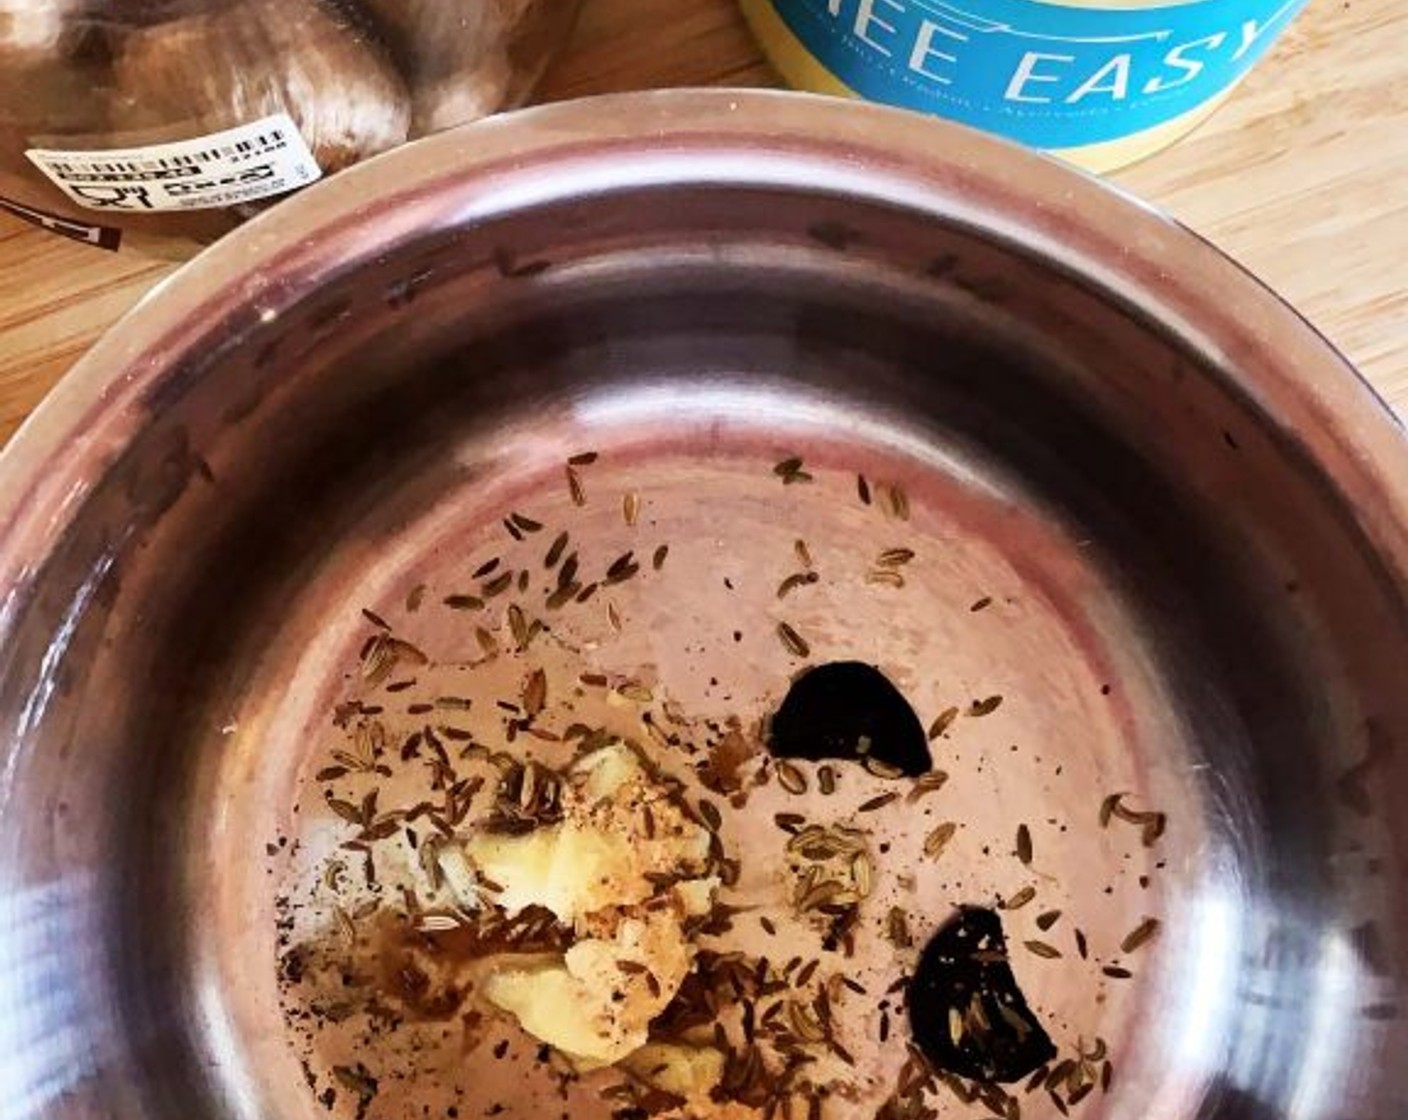 step 2 In a saucepan on medium heat, melt the Ghee (1 Tbsp). Then, add Fennel Seeds (1/4 tsp), Cumin Seeds (1/8 tsp), Ground Ginger (1/4 tsp), Ground Black Pepper (1/8 tsp), and Black Garlic (1/4 head) and toast for a few minutes.